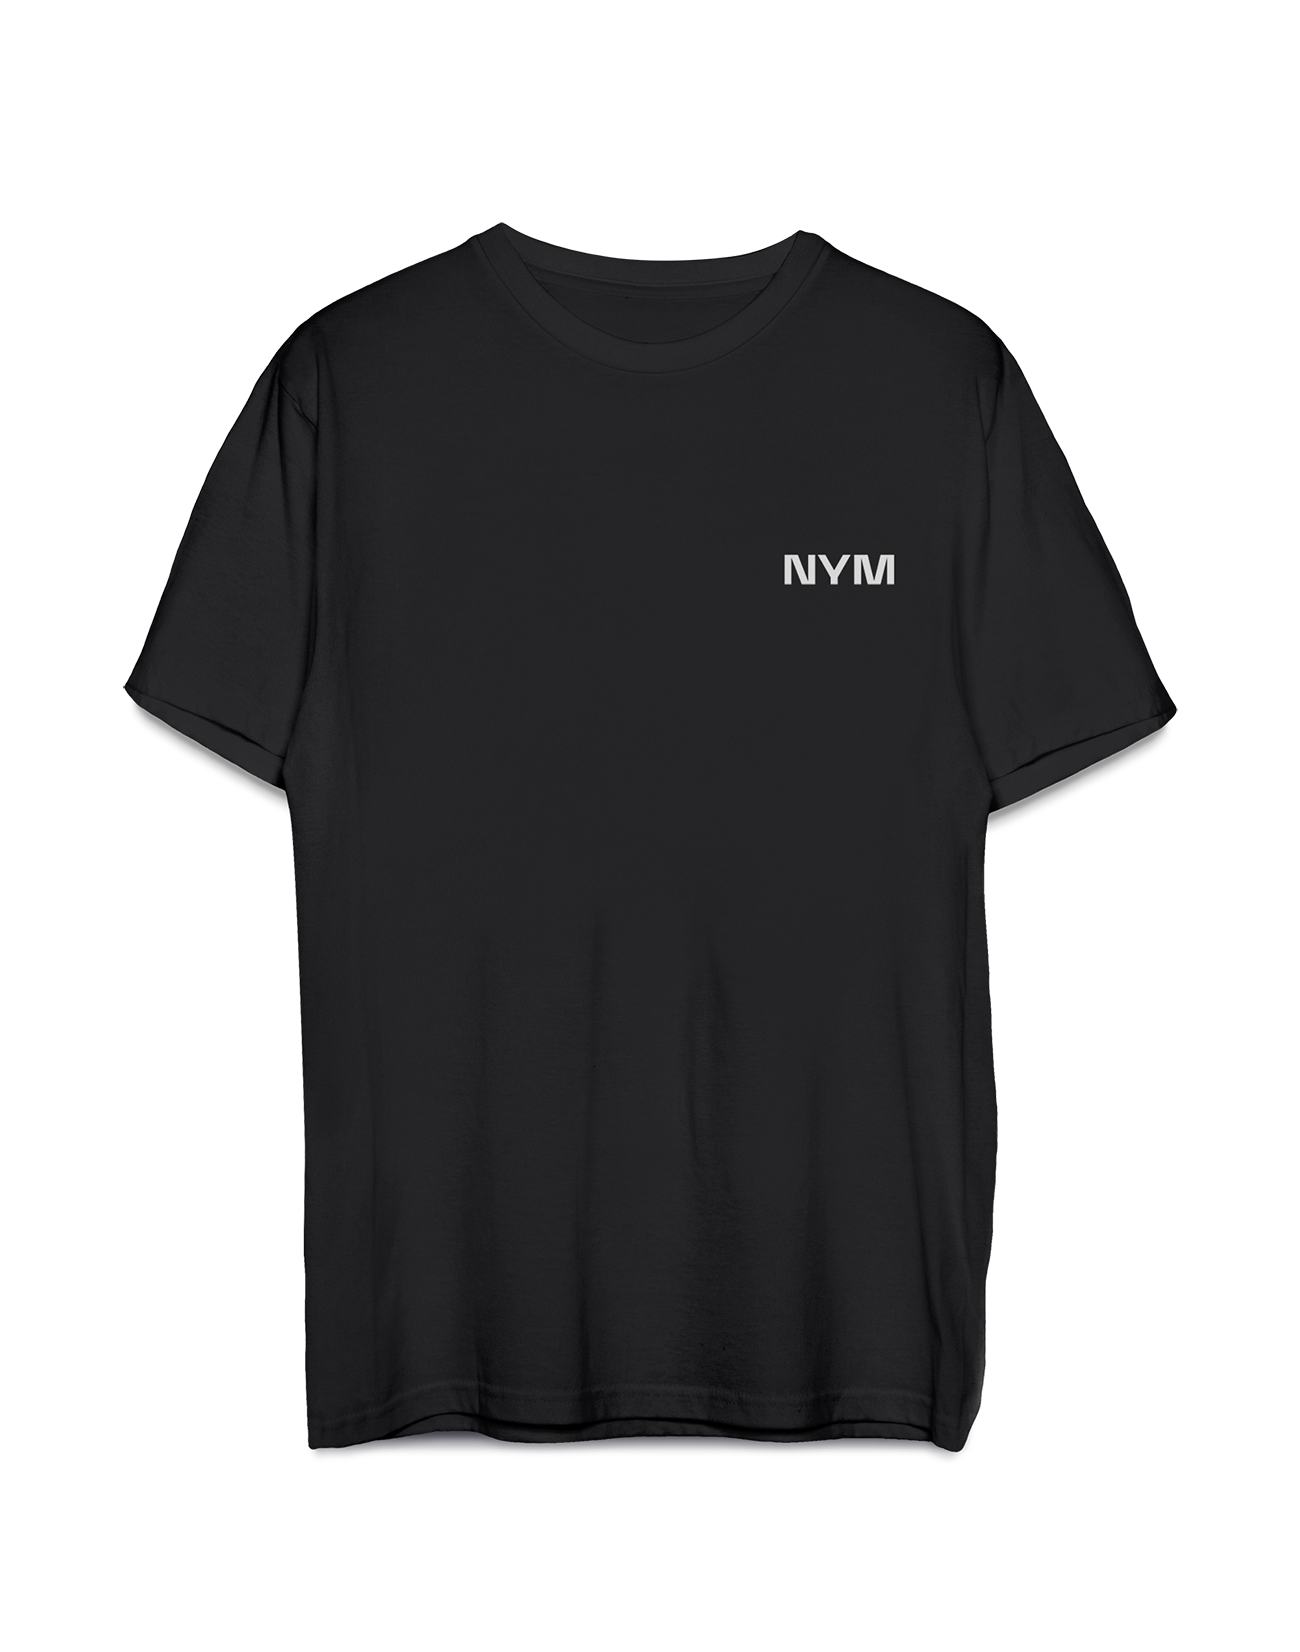 Return of Privacy black unisex t-shirt